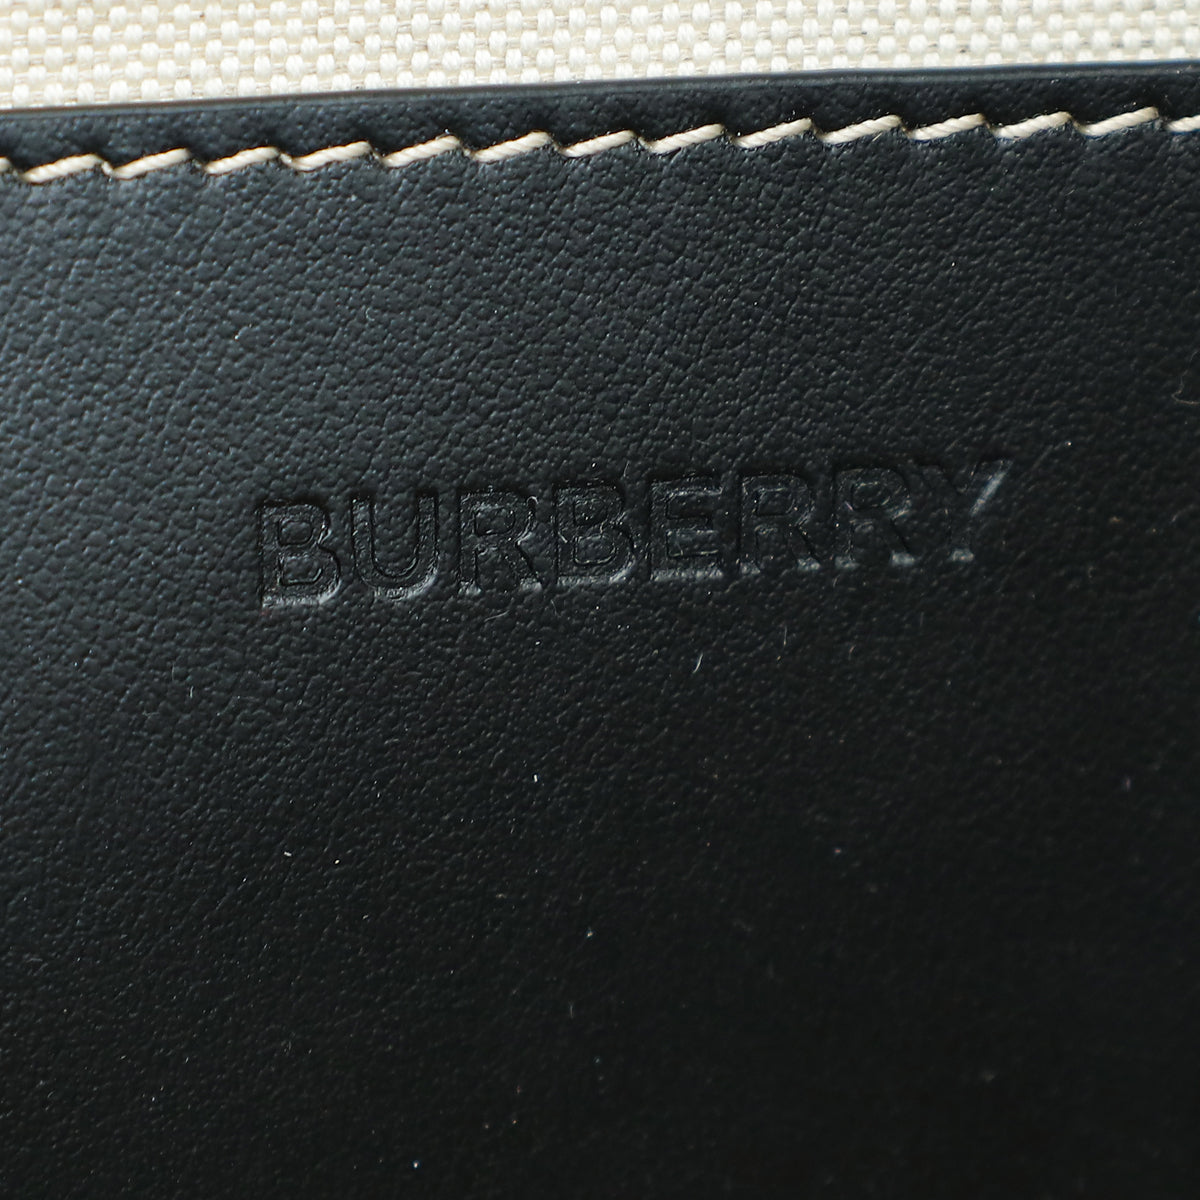 Burberry Bicolor West Belt Bag